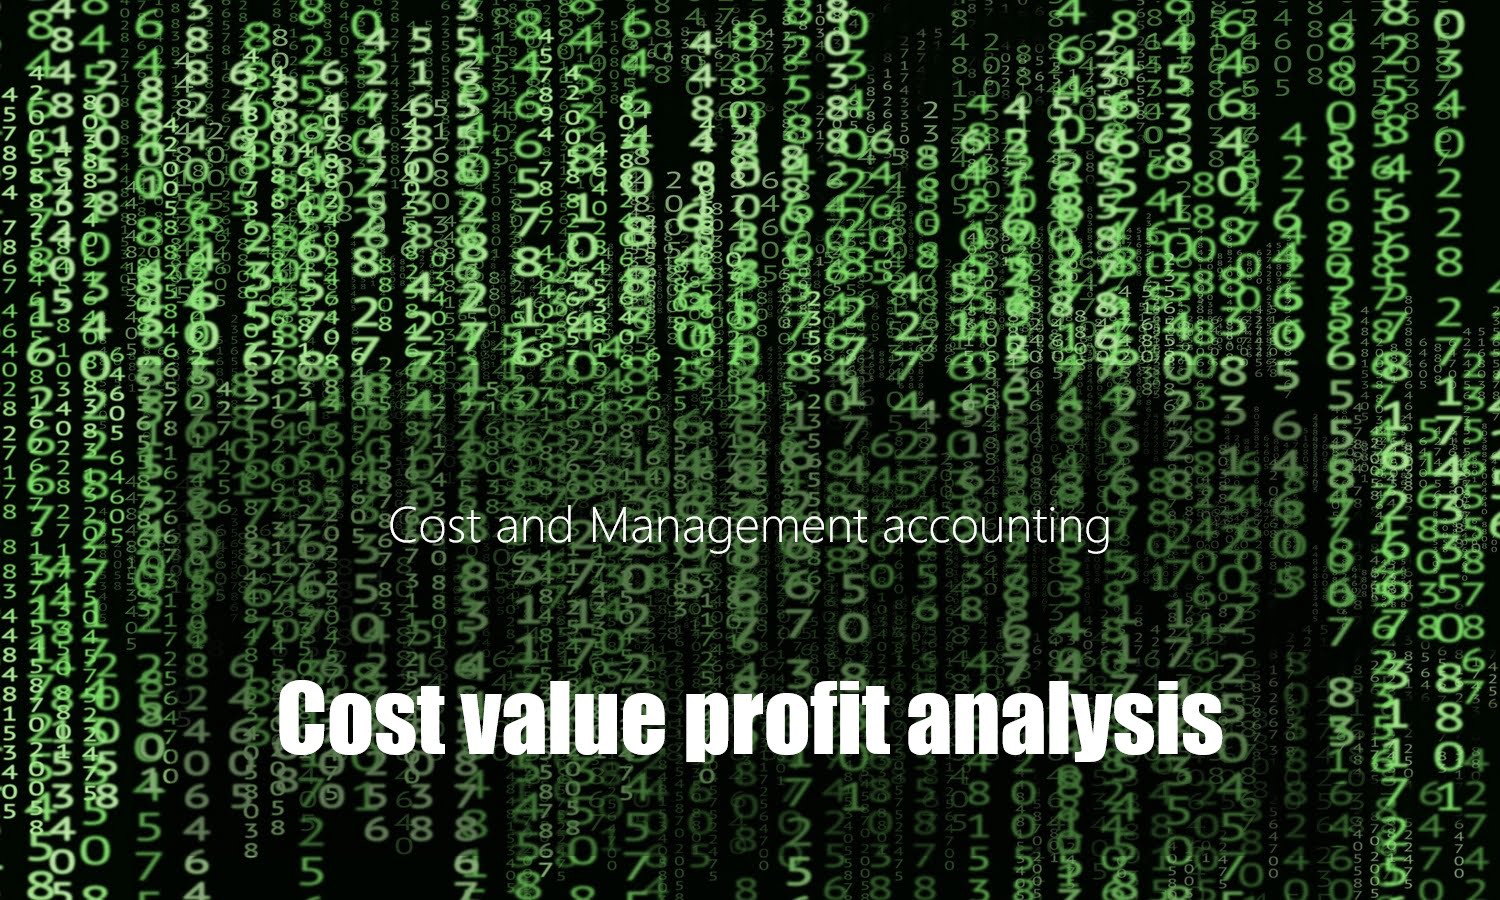 Cost value profit analysis